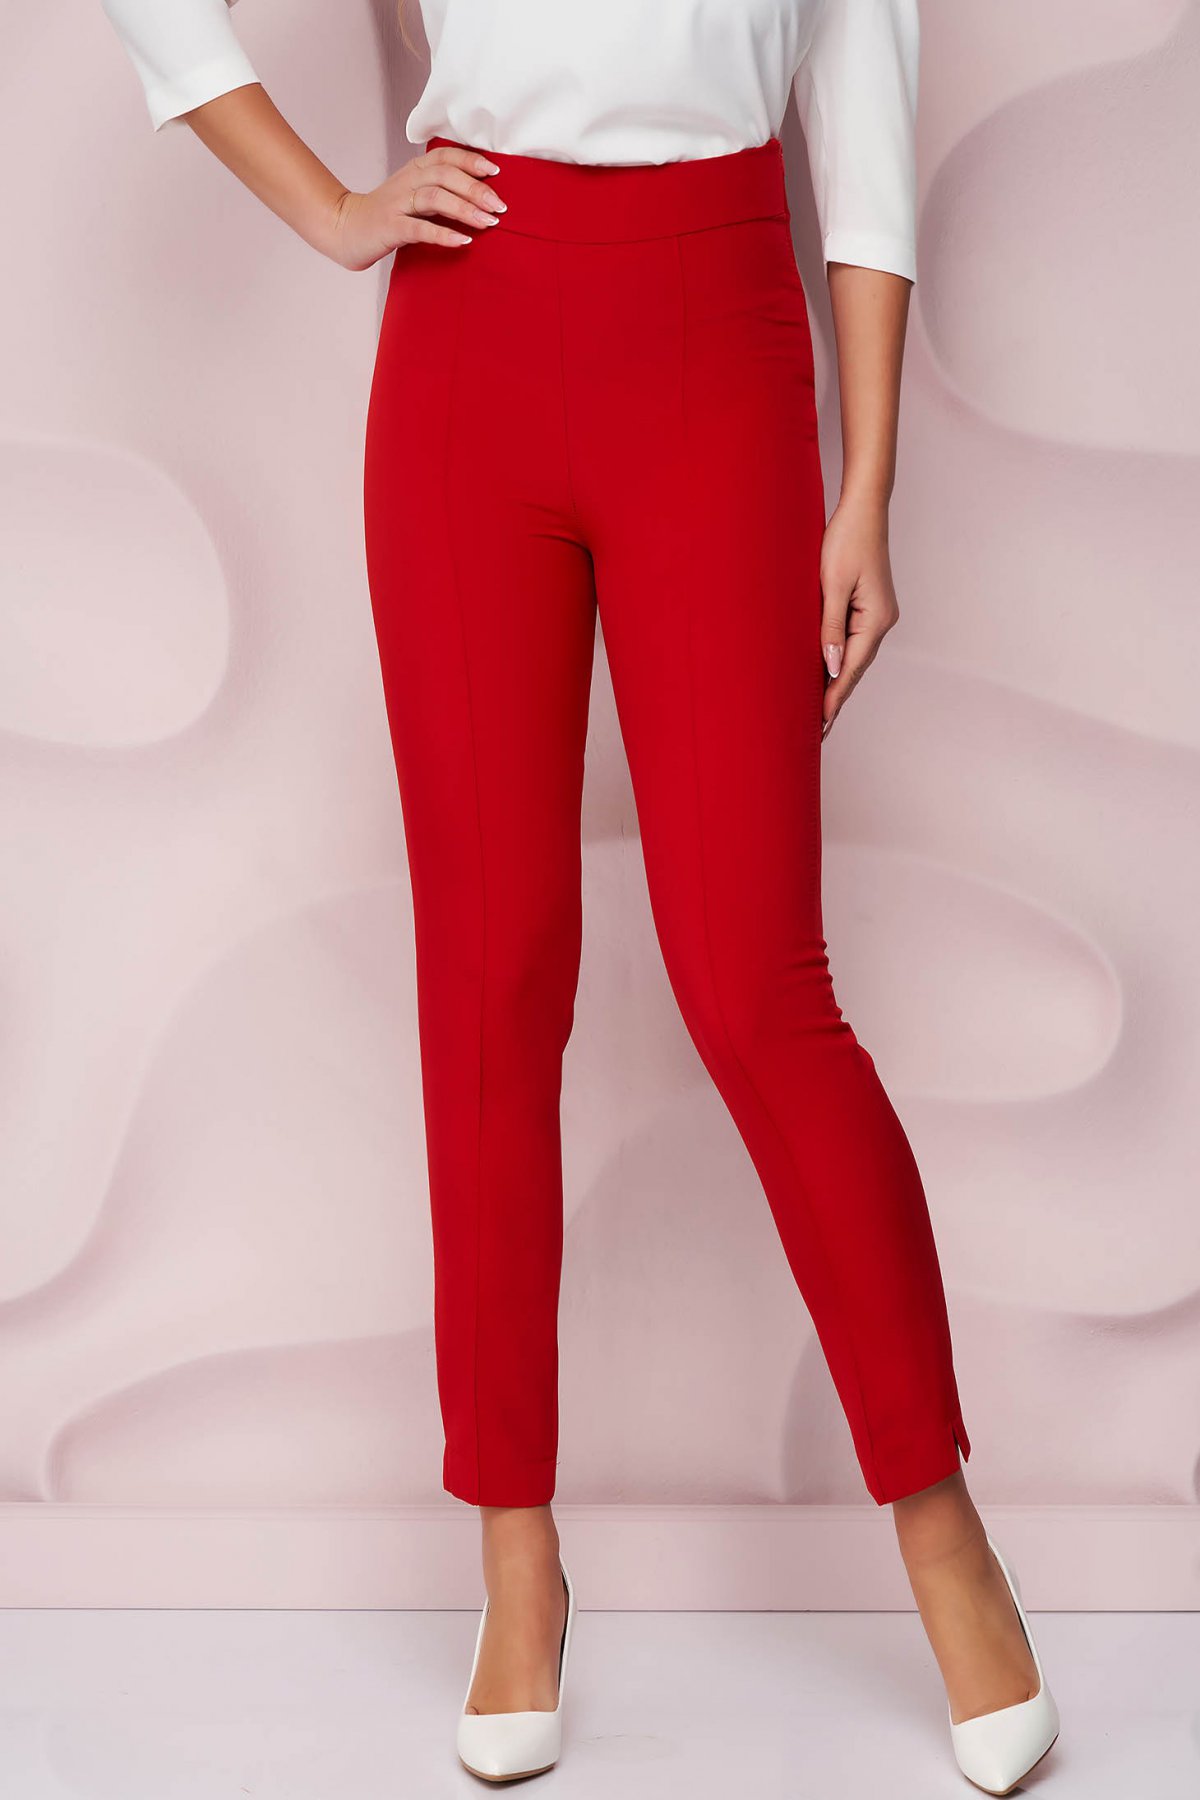 Pantaloni rosii eleganti conici cu talie inalta din stofa stradivarius.com imagine 2022 13clothing.ro